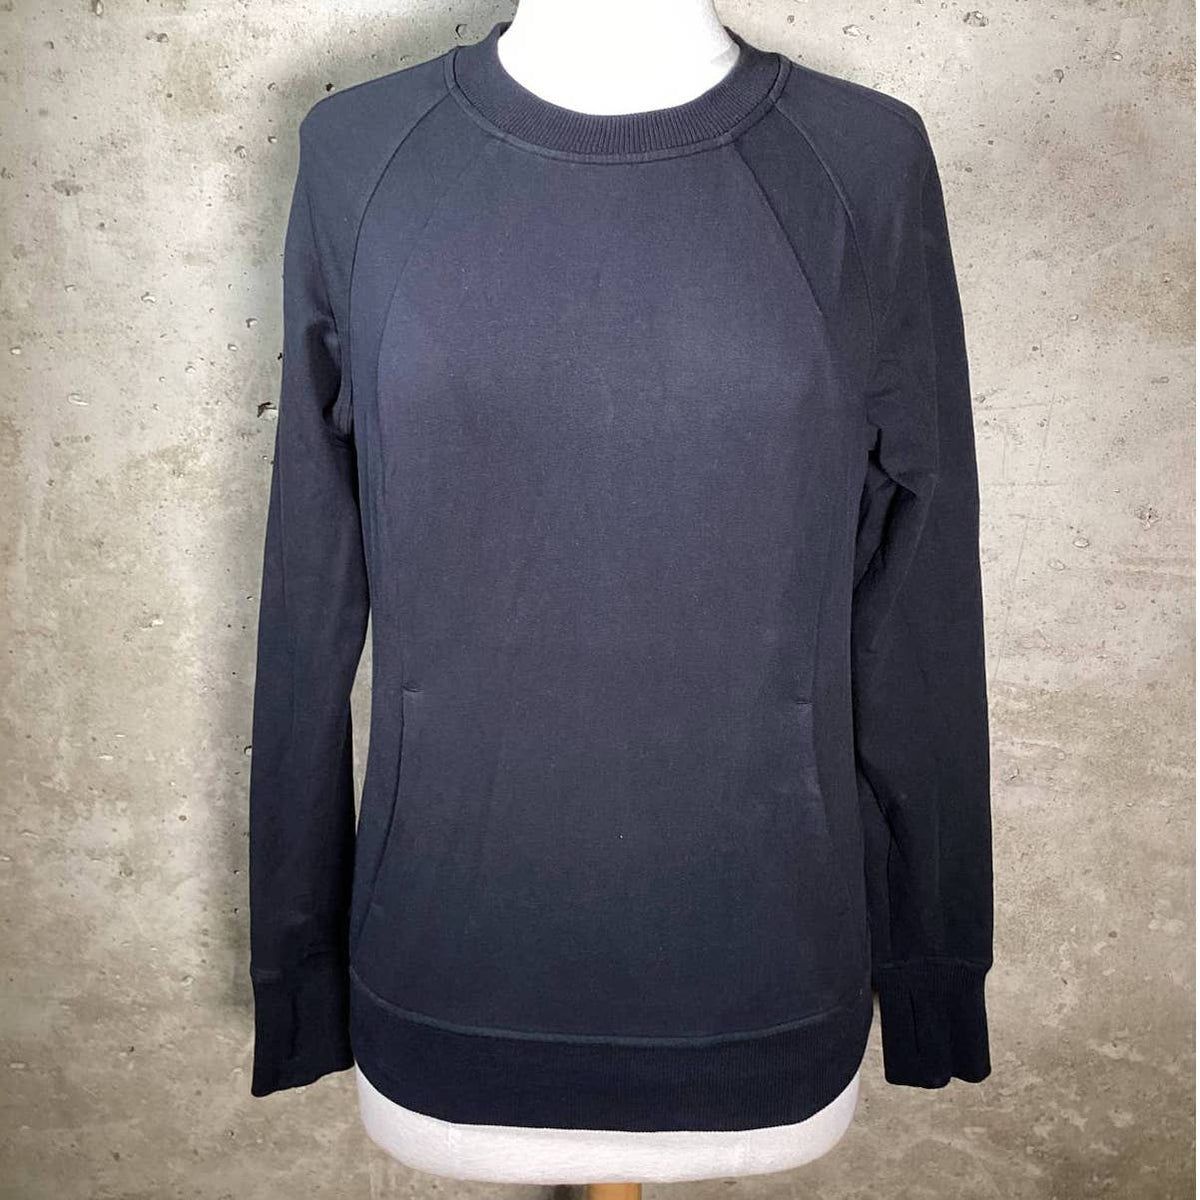 Lululemon Women’s Black Sweatshirt Sz.4